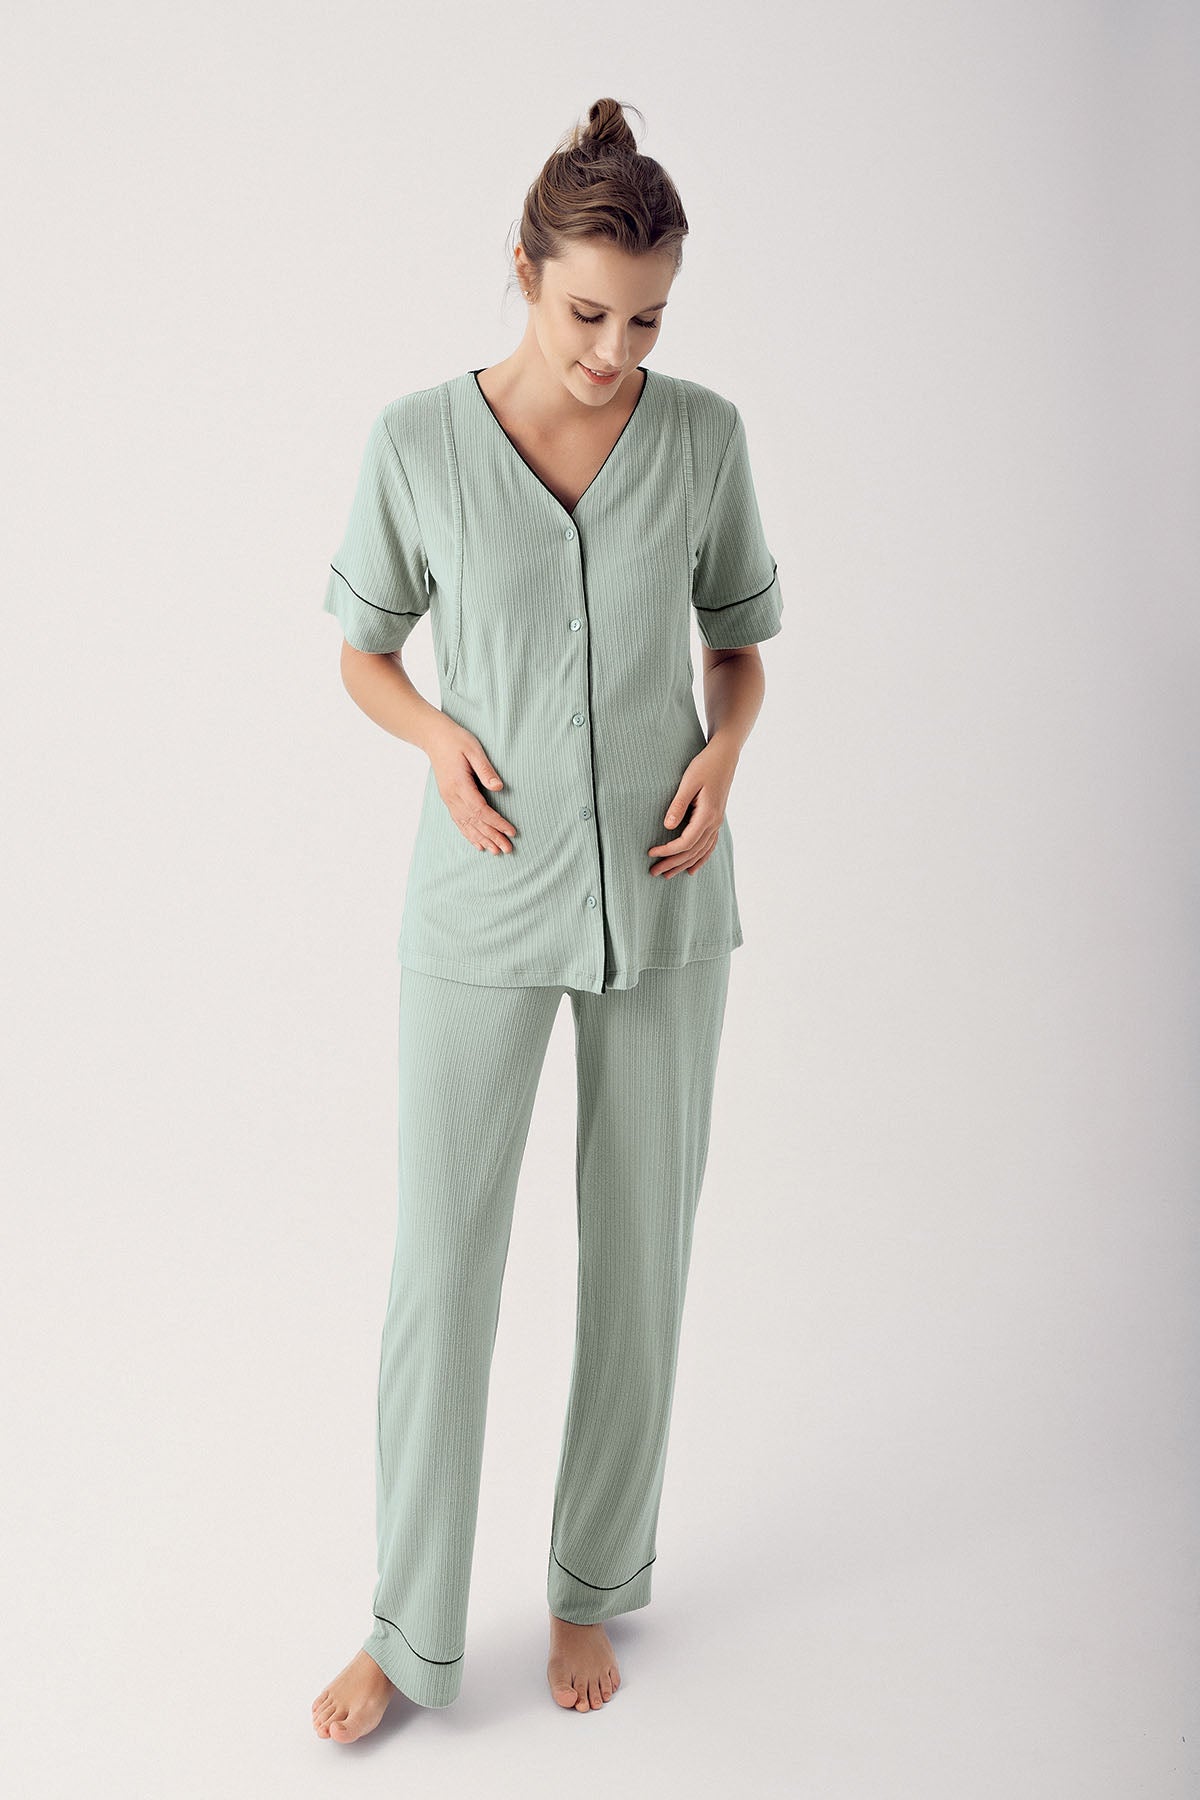 Shopymommy 14209 Double Breast Feeding Maternity & Nursing Pajamas Green